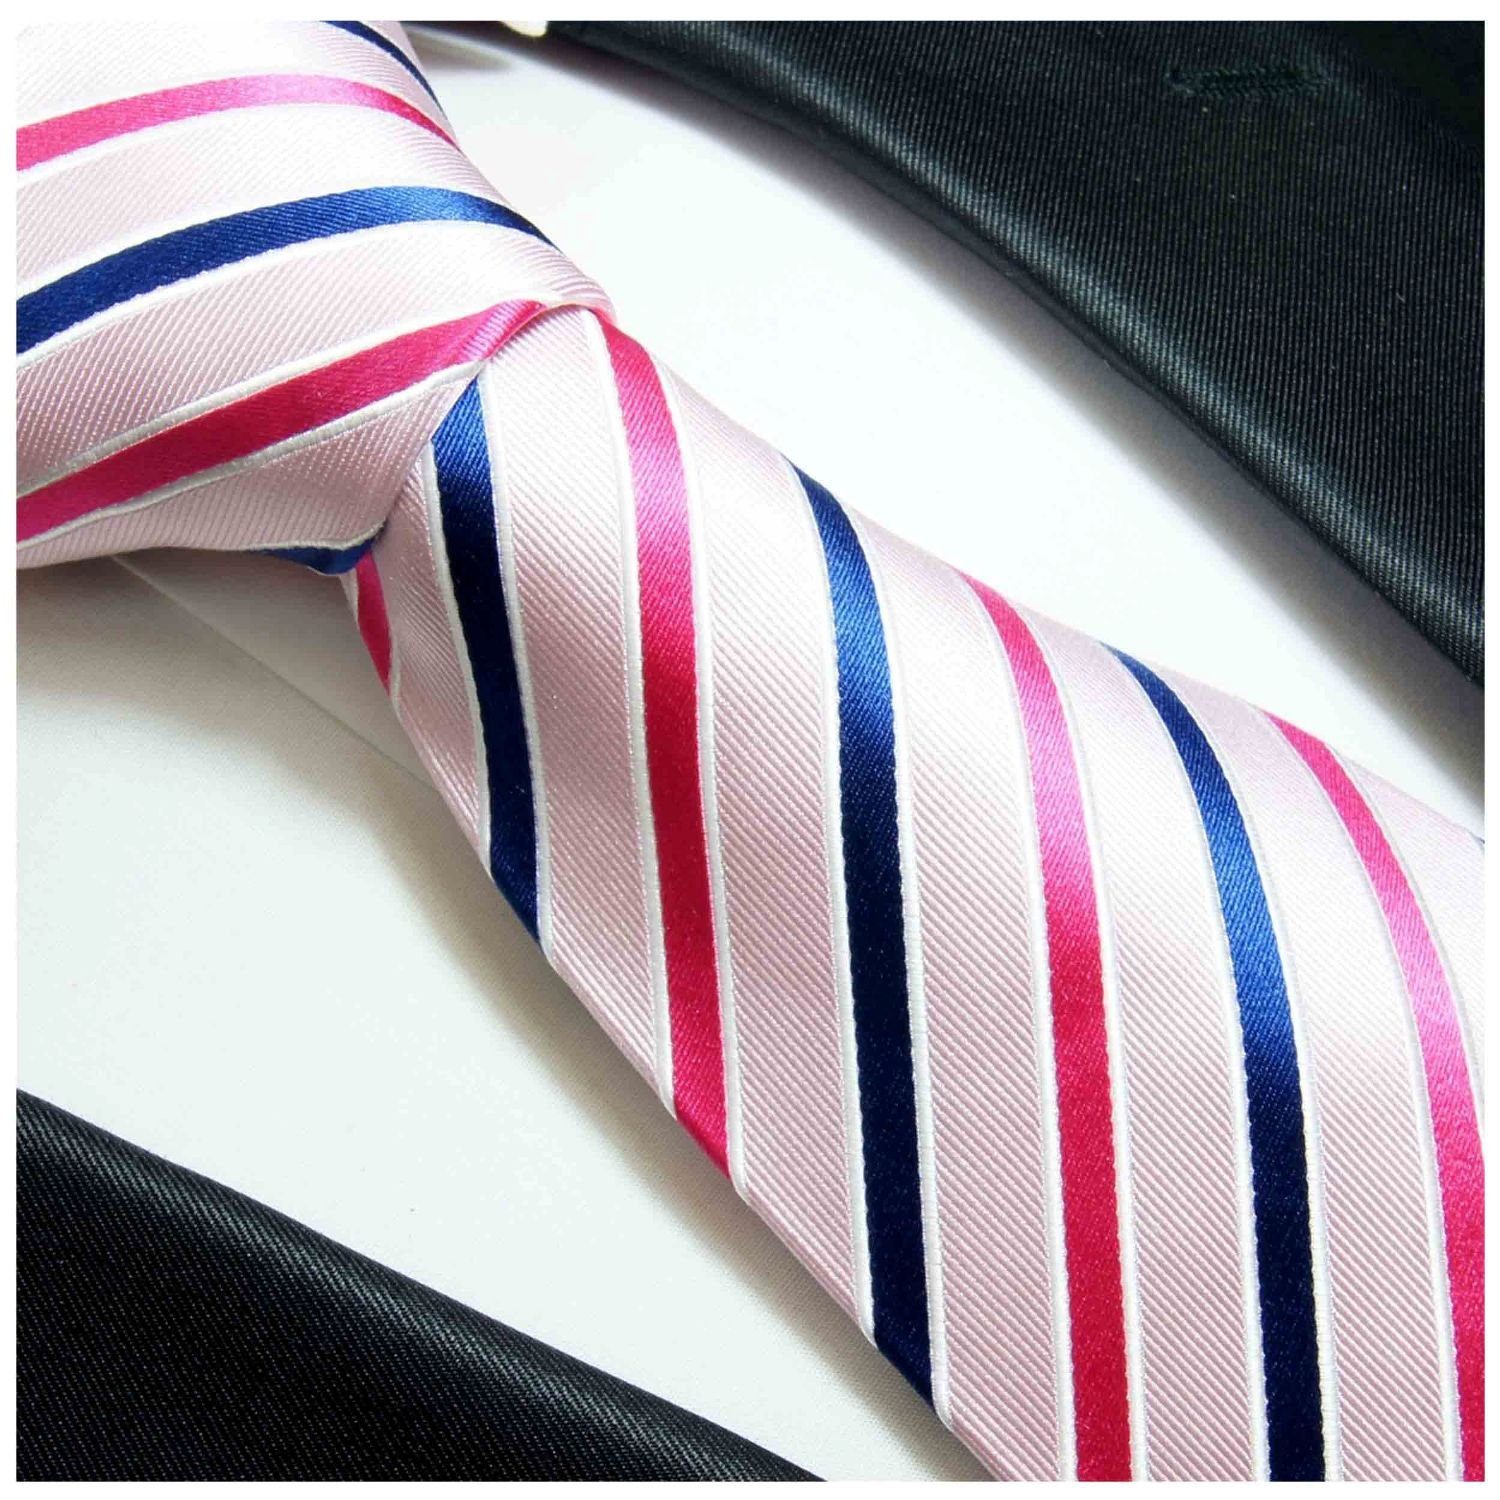 Schmal Herren 600 100% rosa Schlips Seide Paul Designer Krawatte Seidenkrawatte modern Malone (6cm), gestreift pink blau